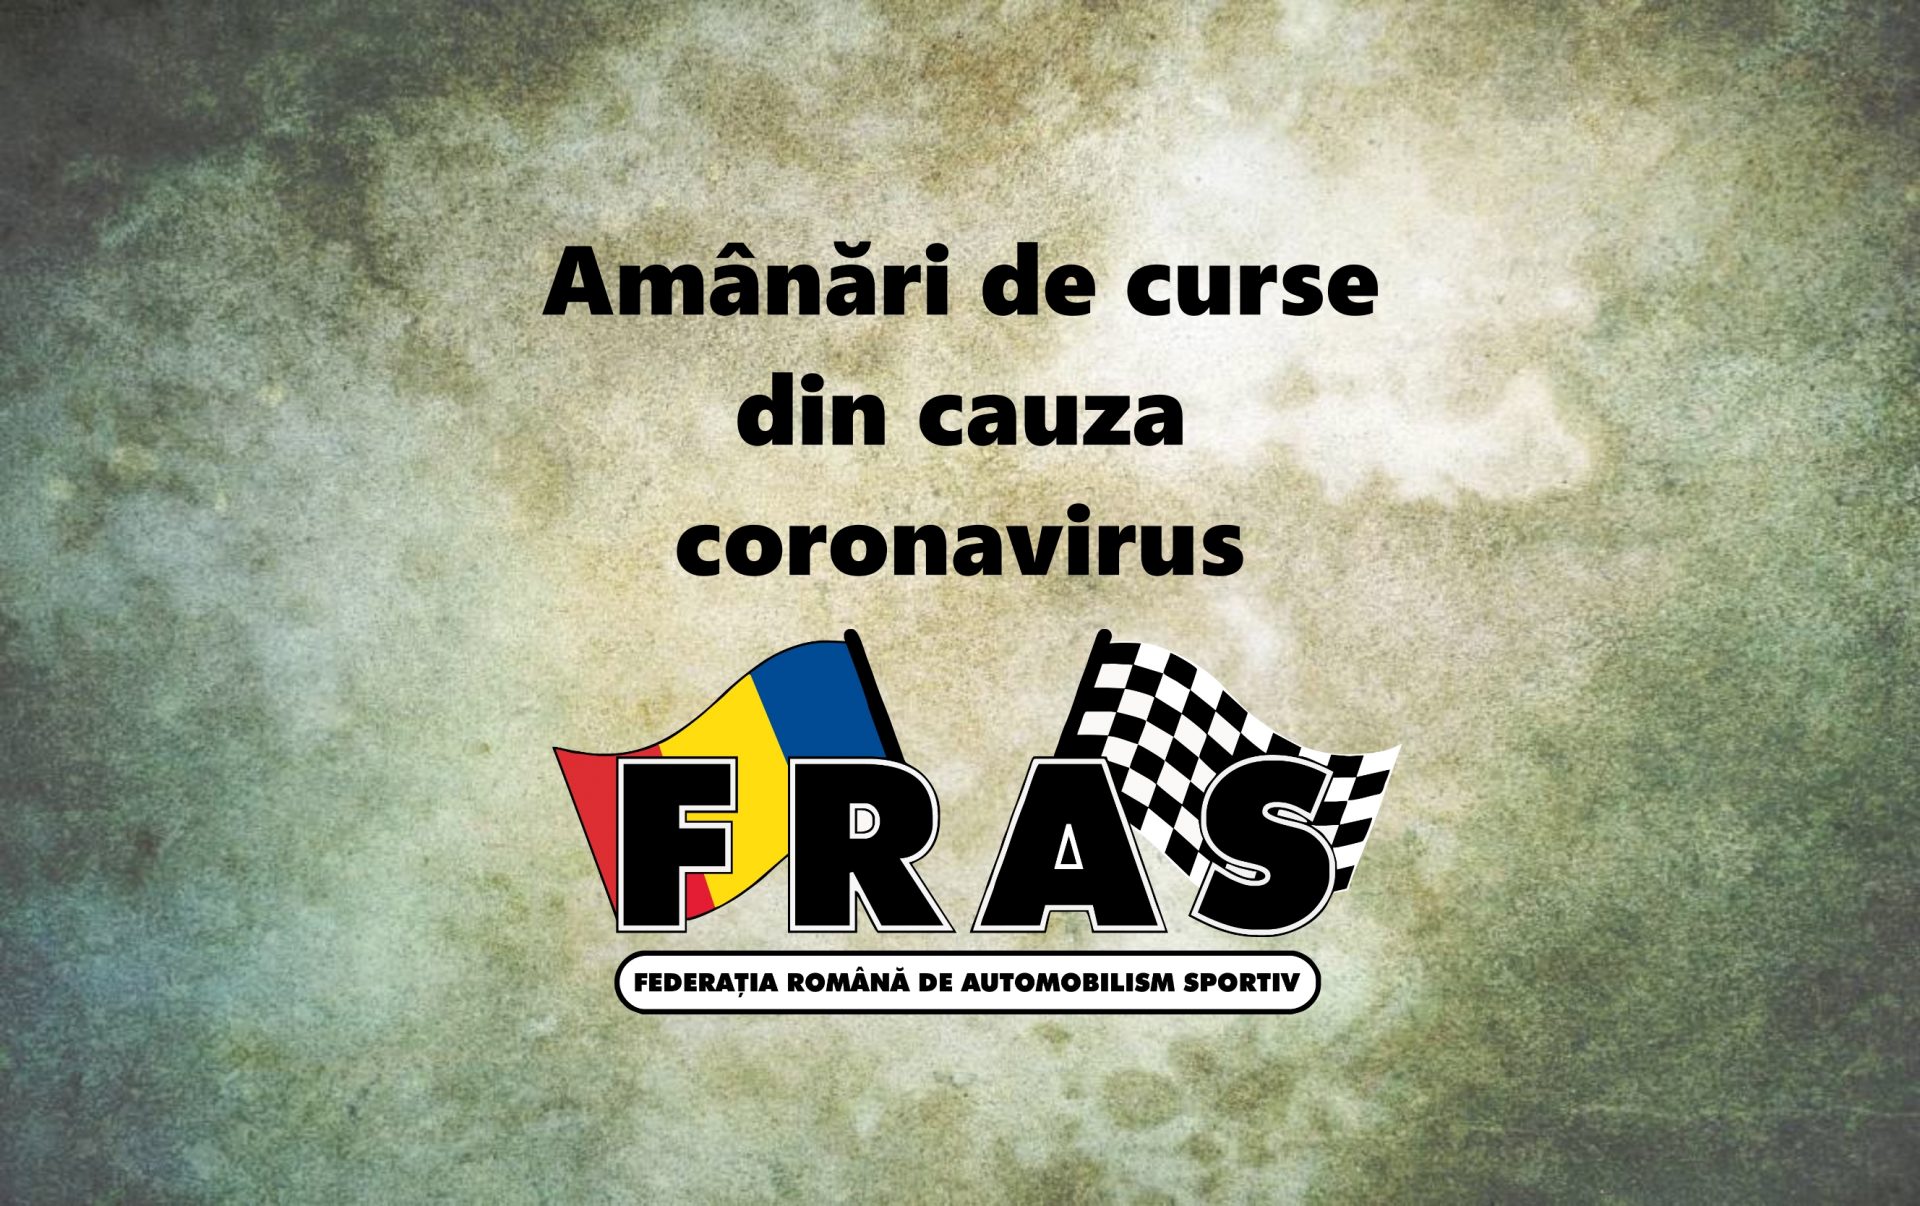 Amanari de competitii in Romania din cauza corona virus